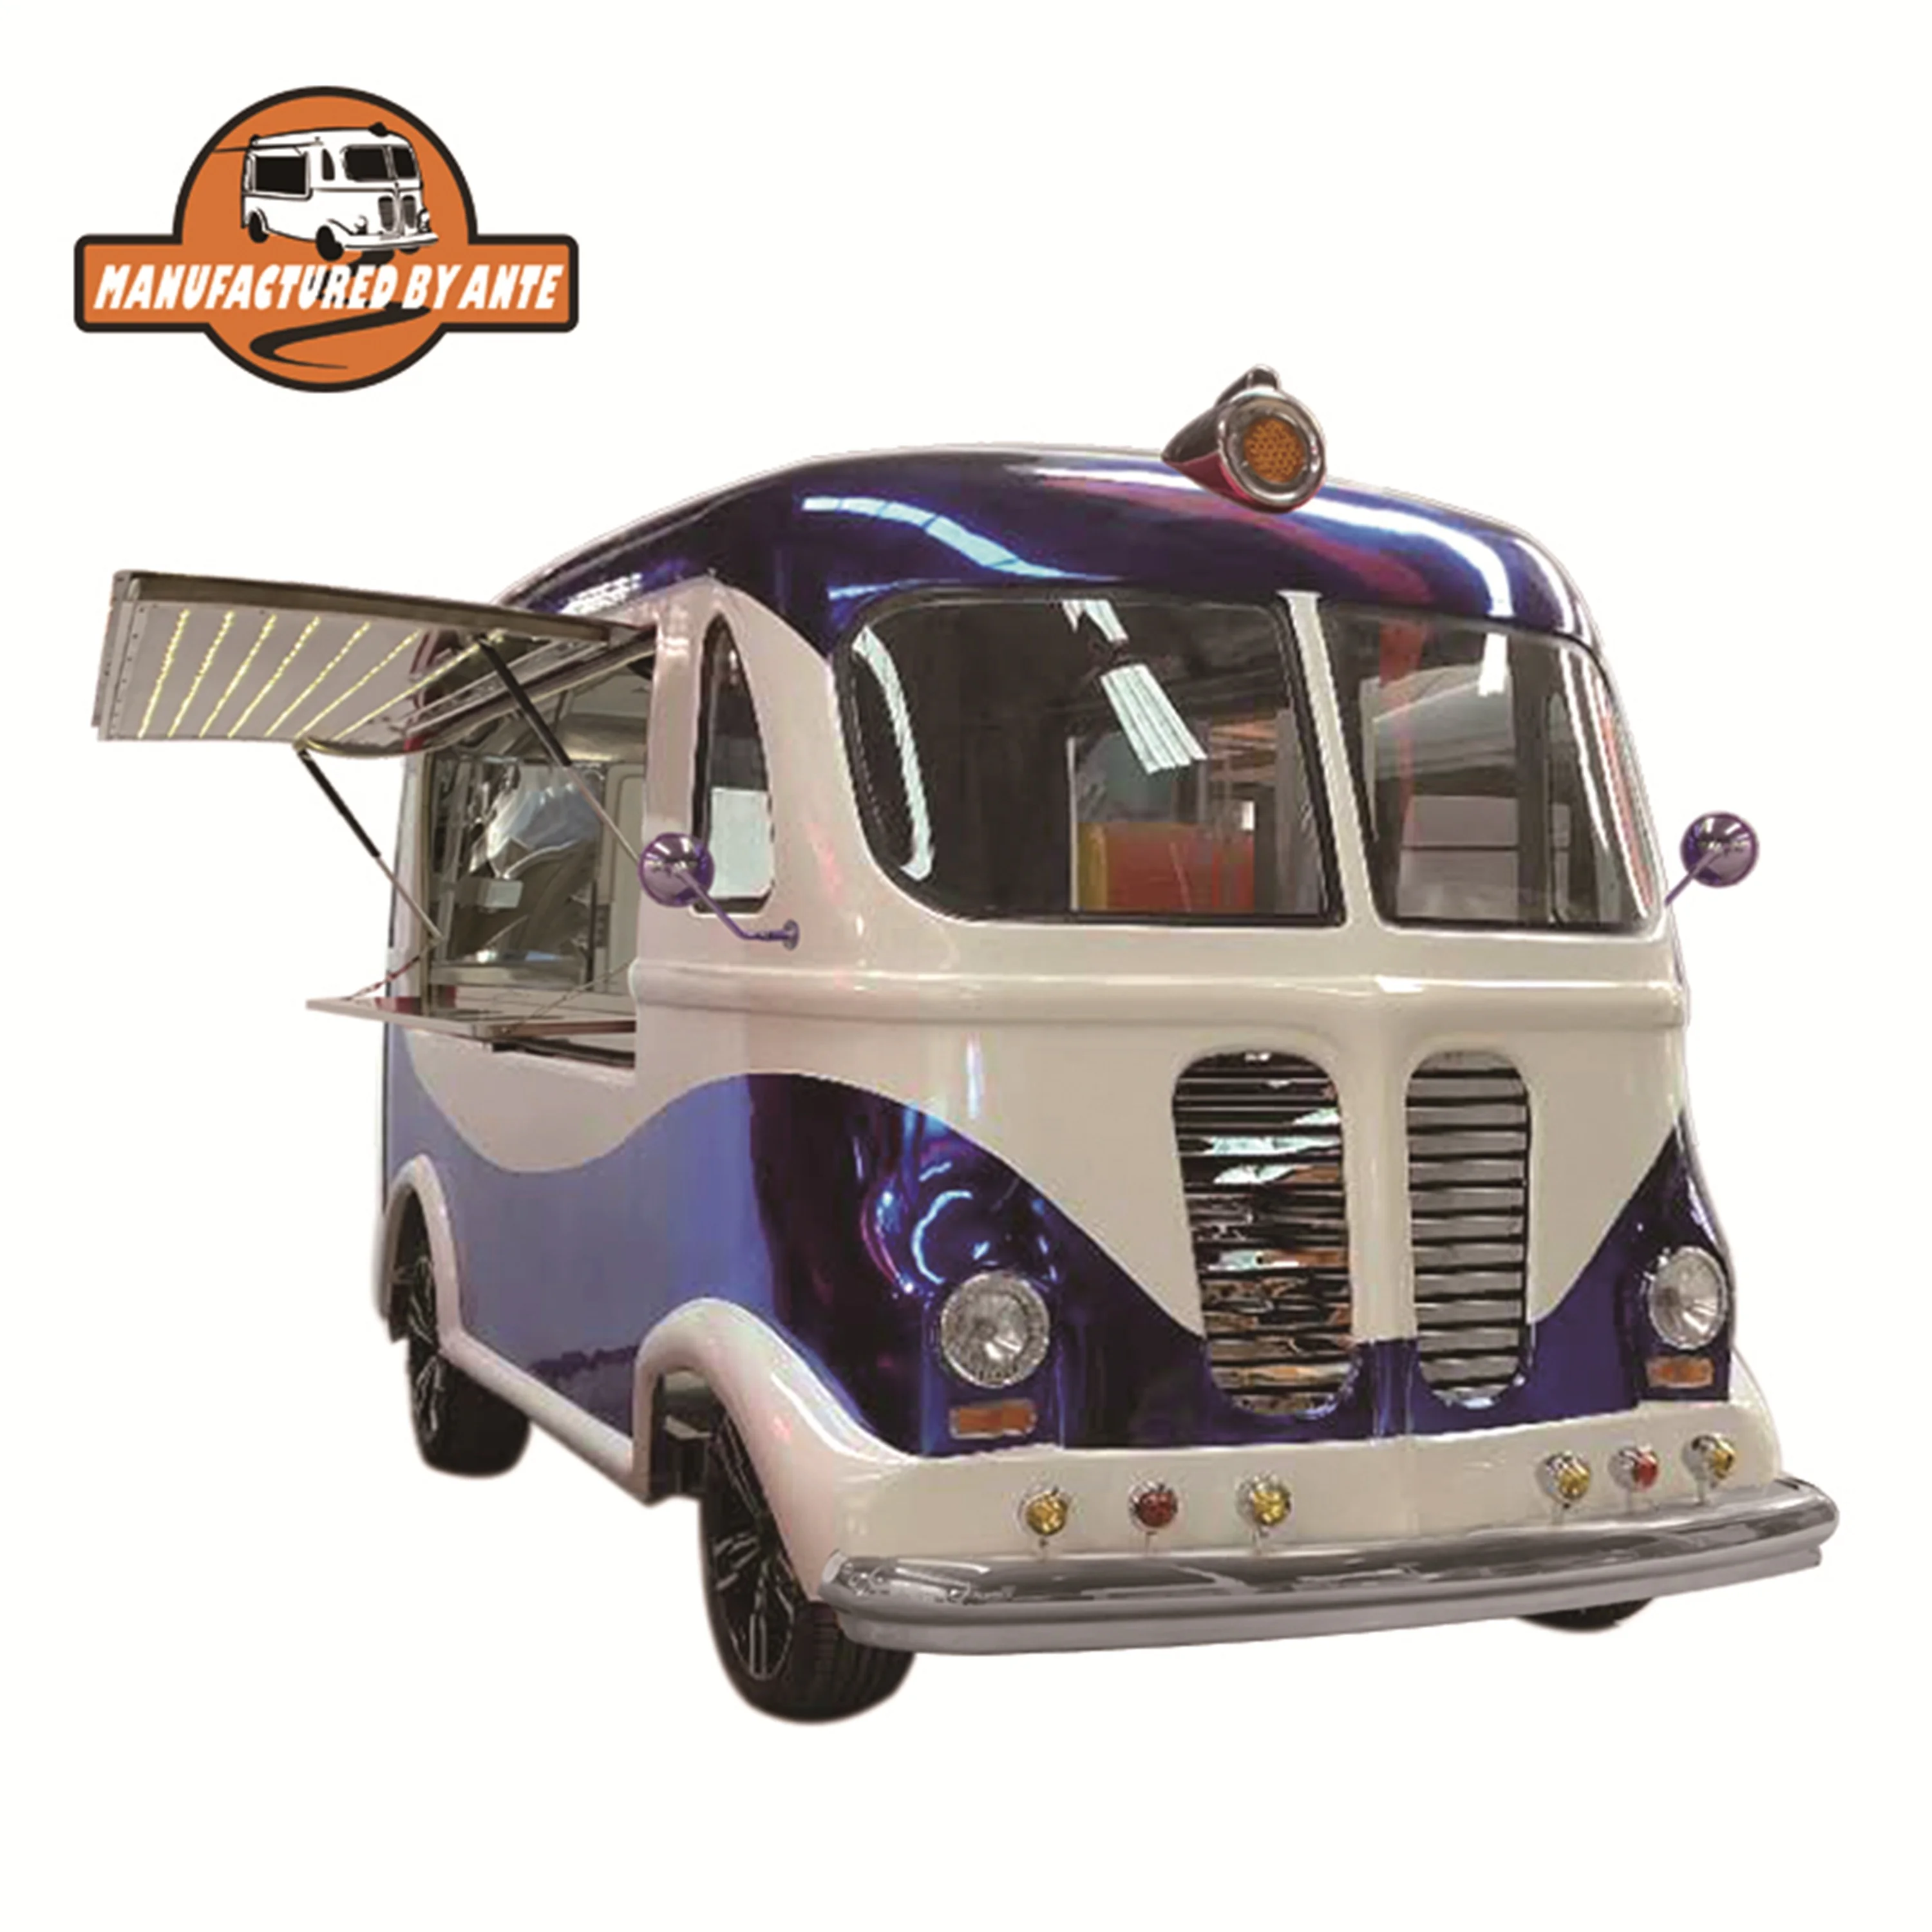 vintage ice cream van for sale